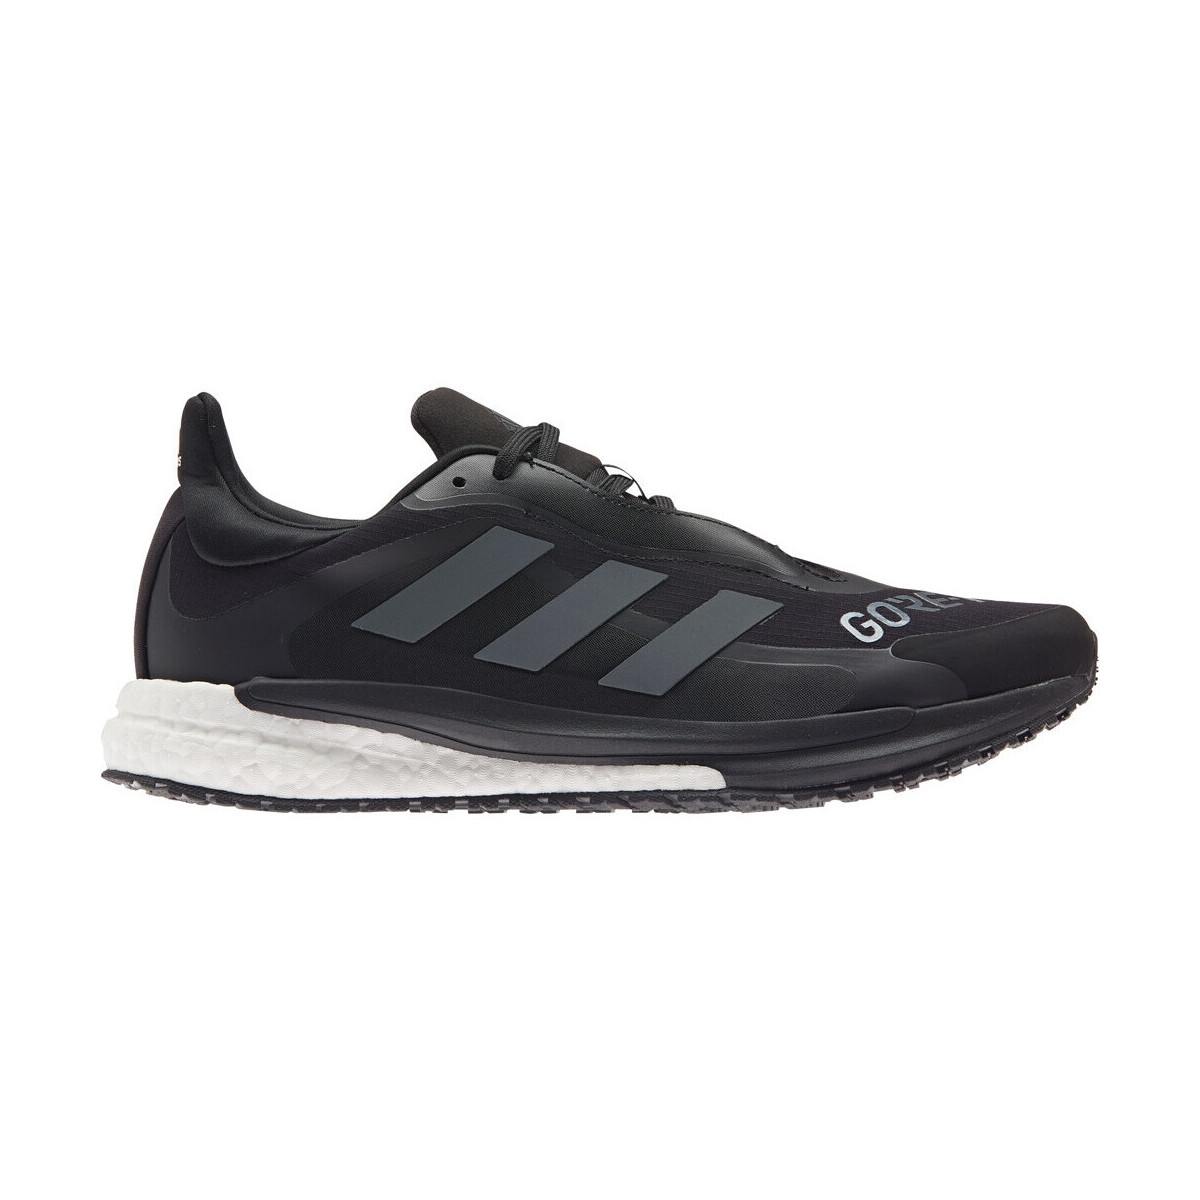 Zapatos Hombre Running / trail adidas Originals SOLAR GLIDE 4 GTX M Negro